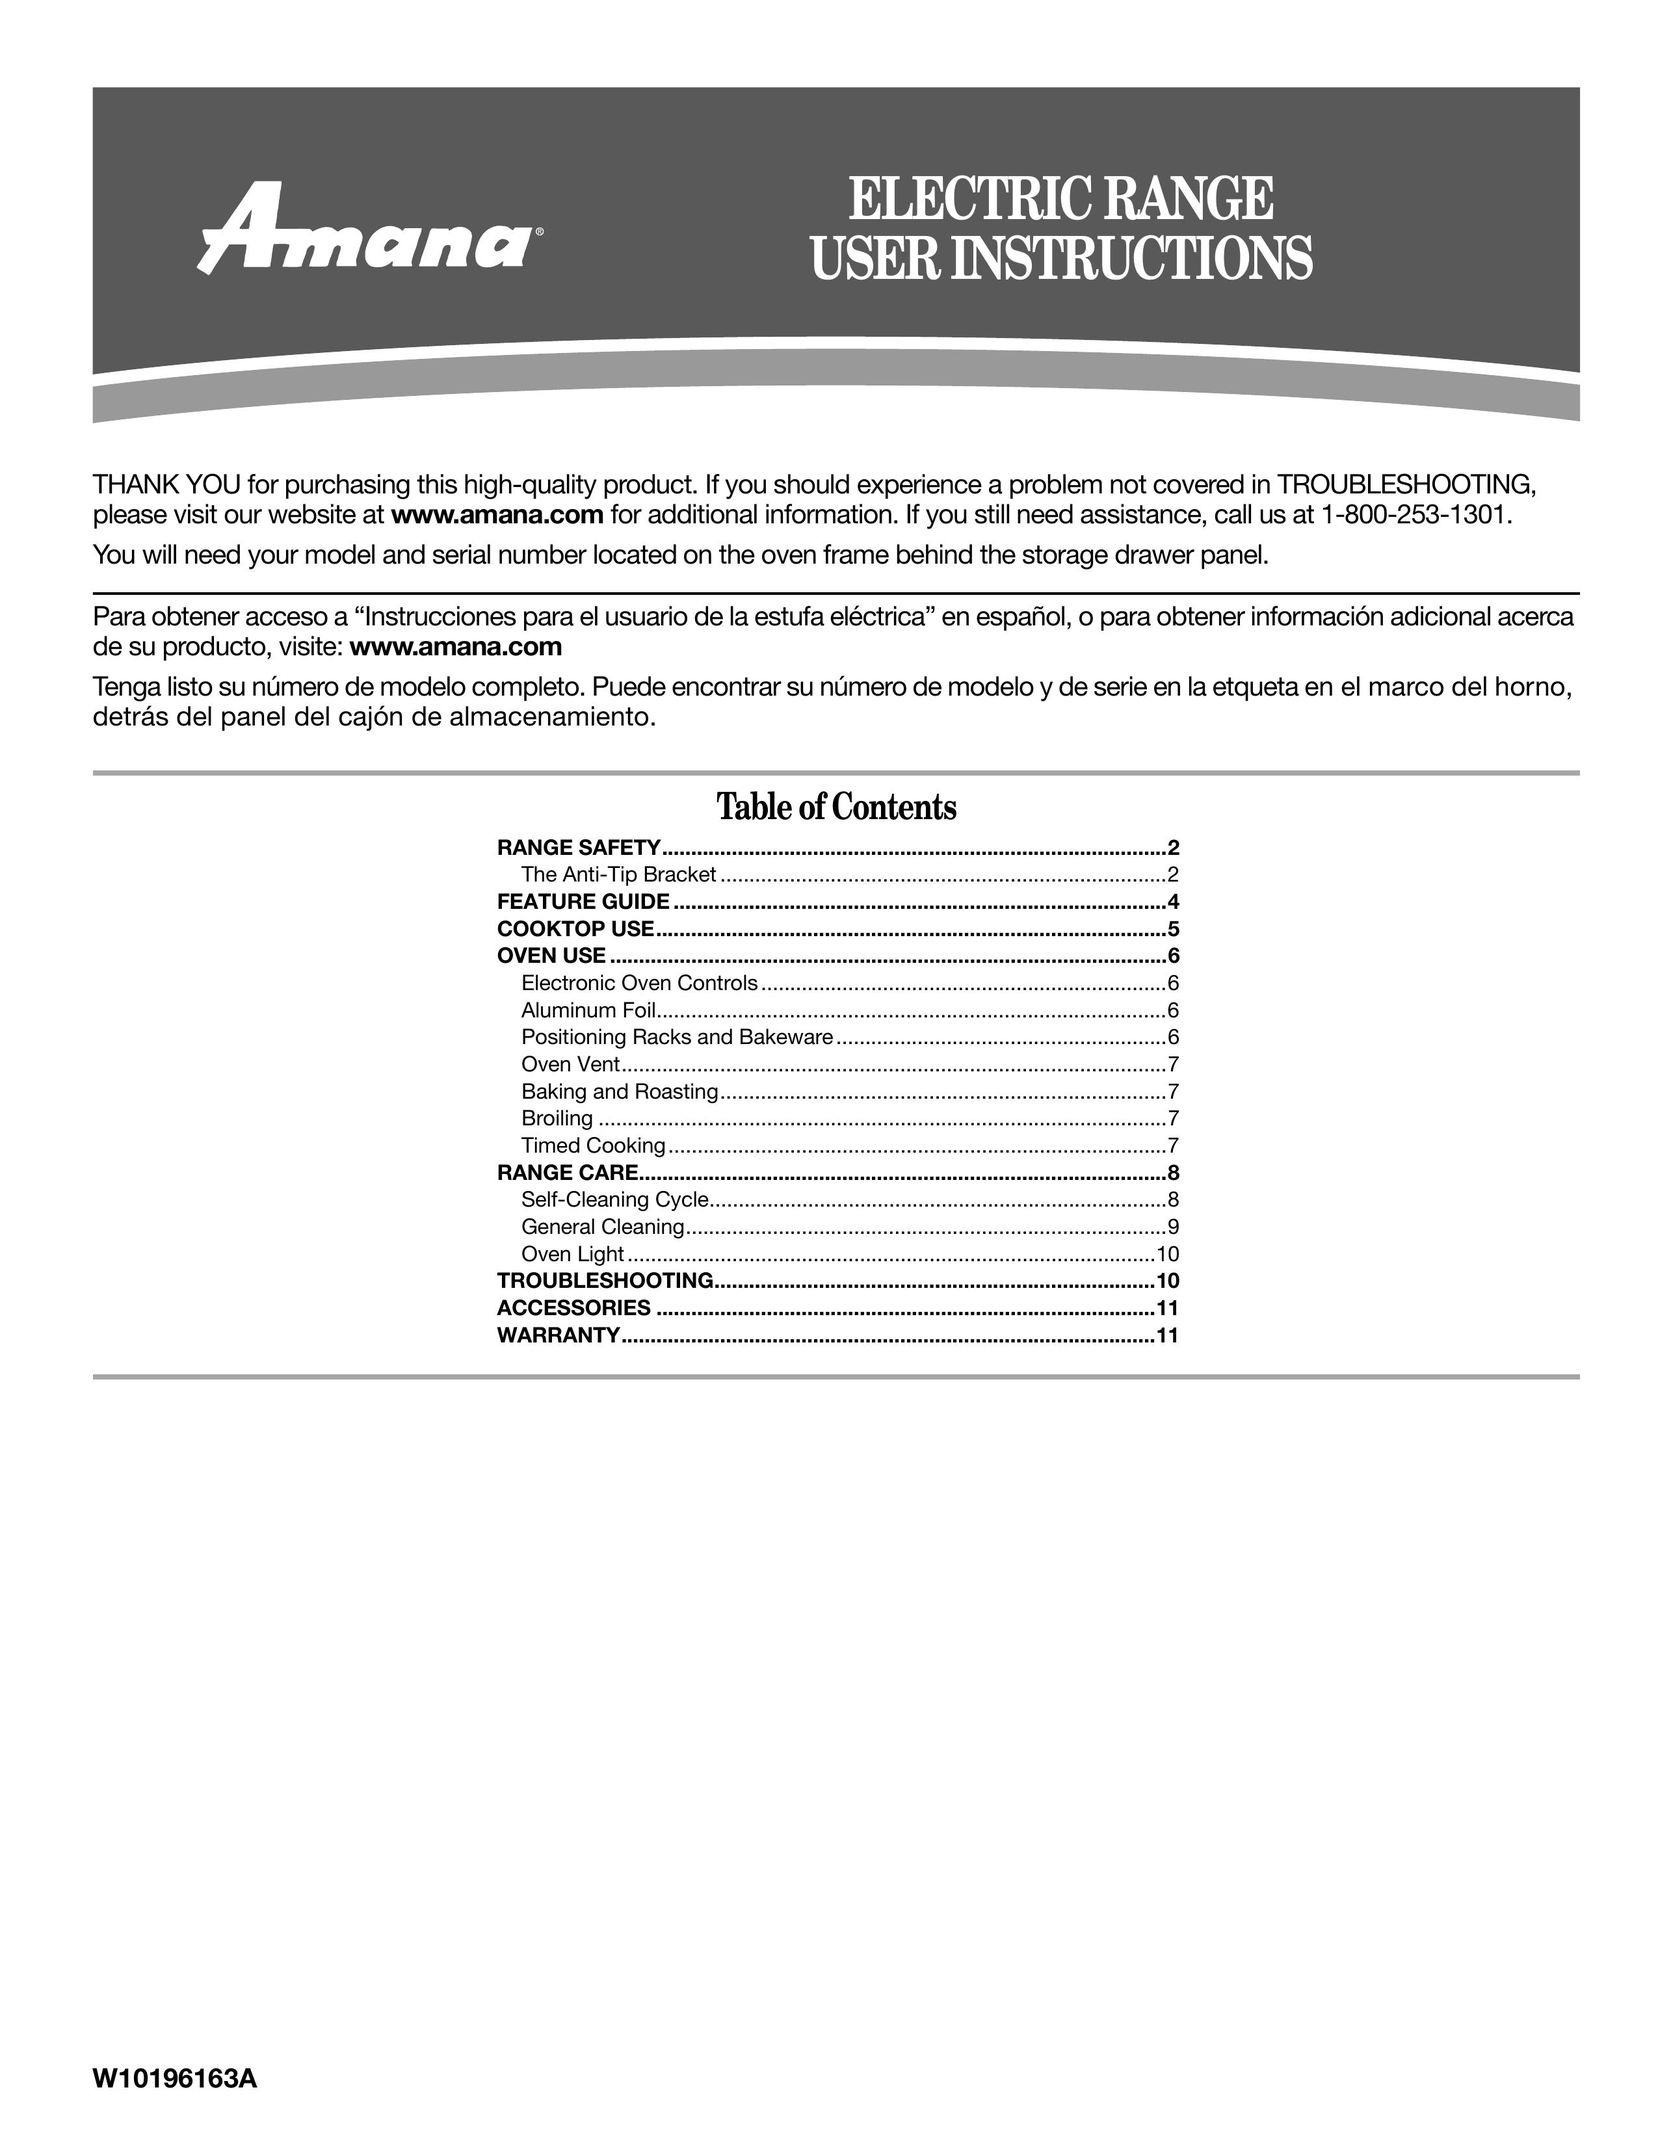 Amana AER5522VAW Range User Manual